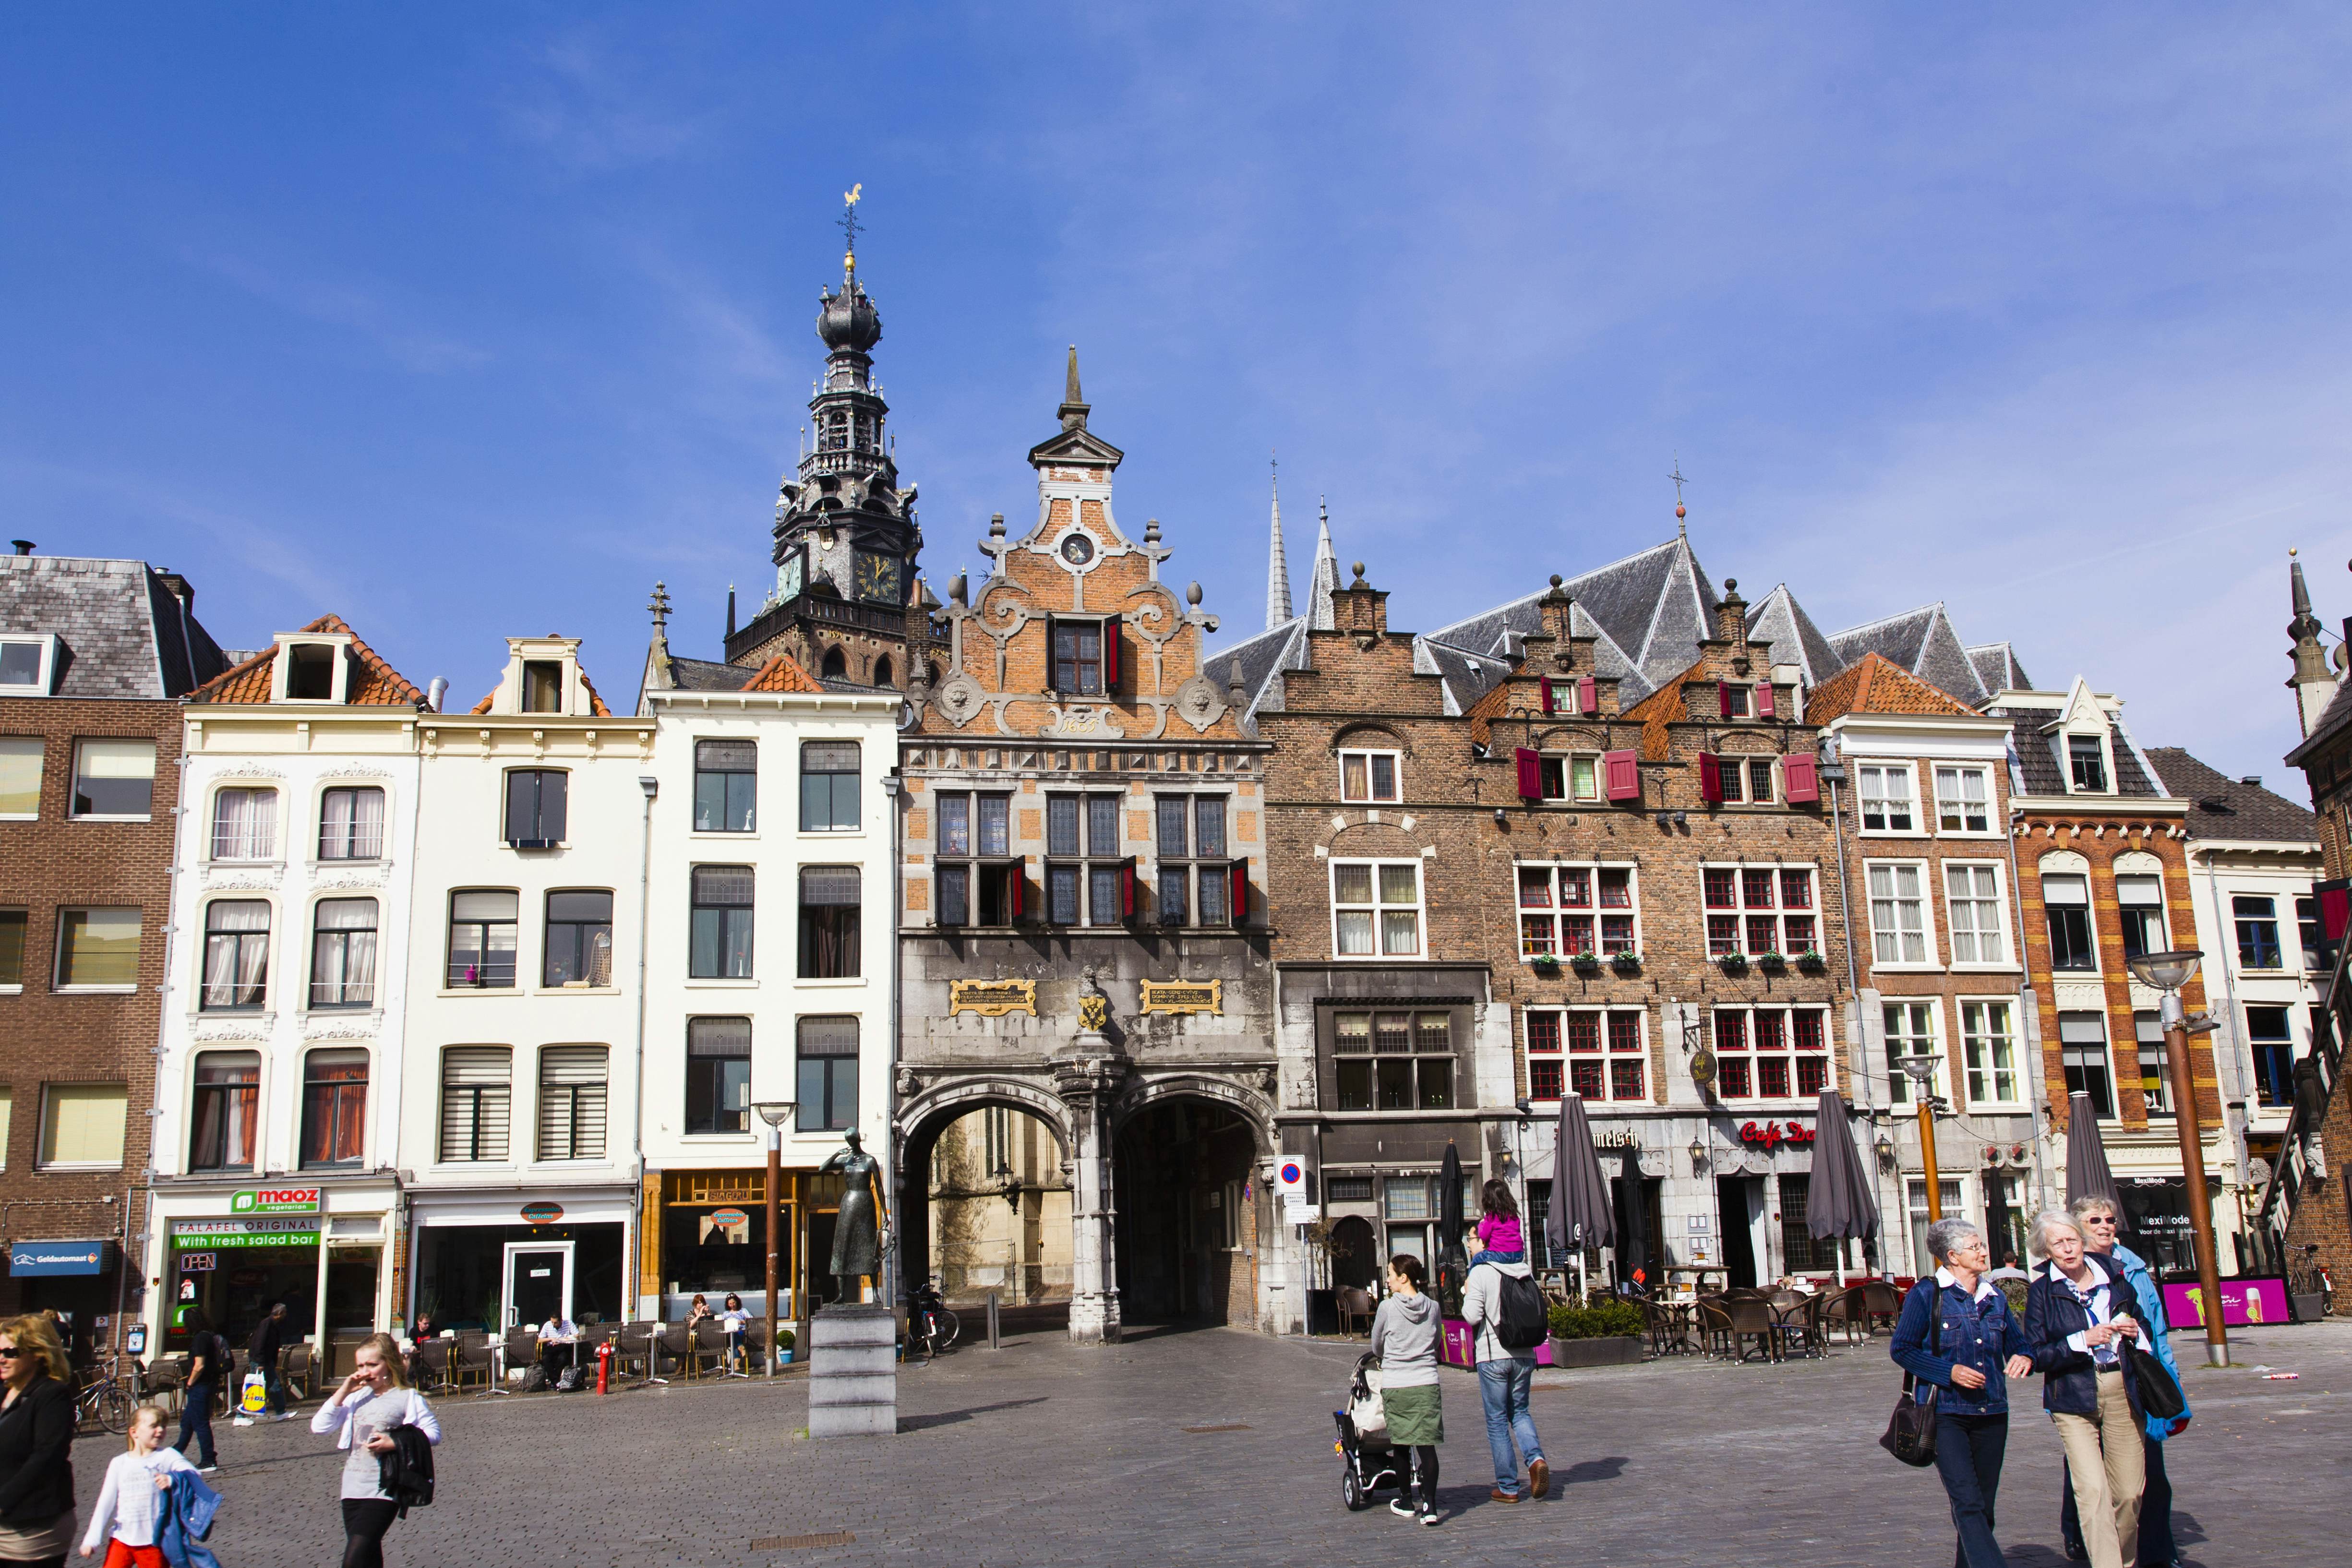 Beeldhouwer Quagga steenkool Nijmegen travel - Lonely Planet | The Netherlands, Europe